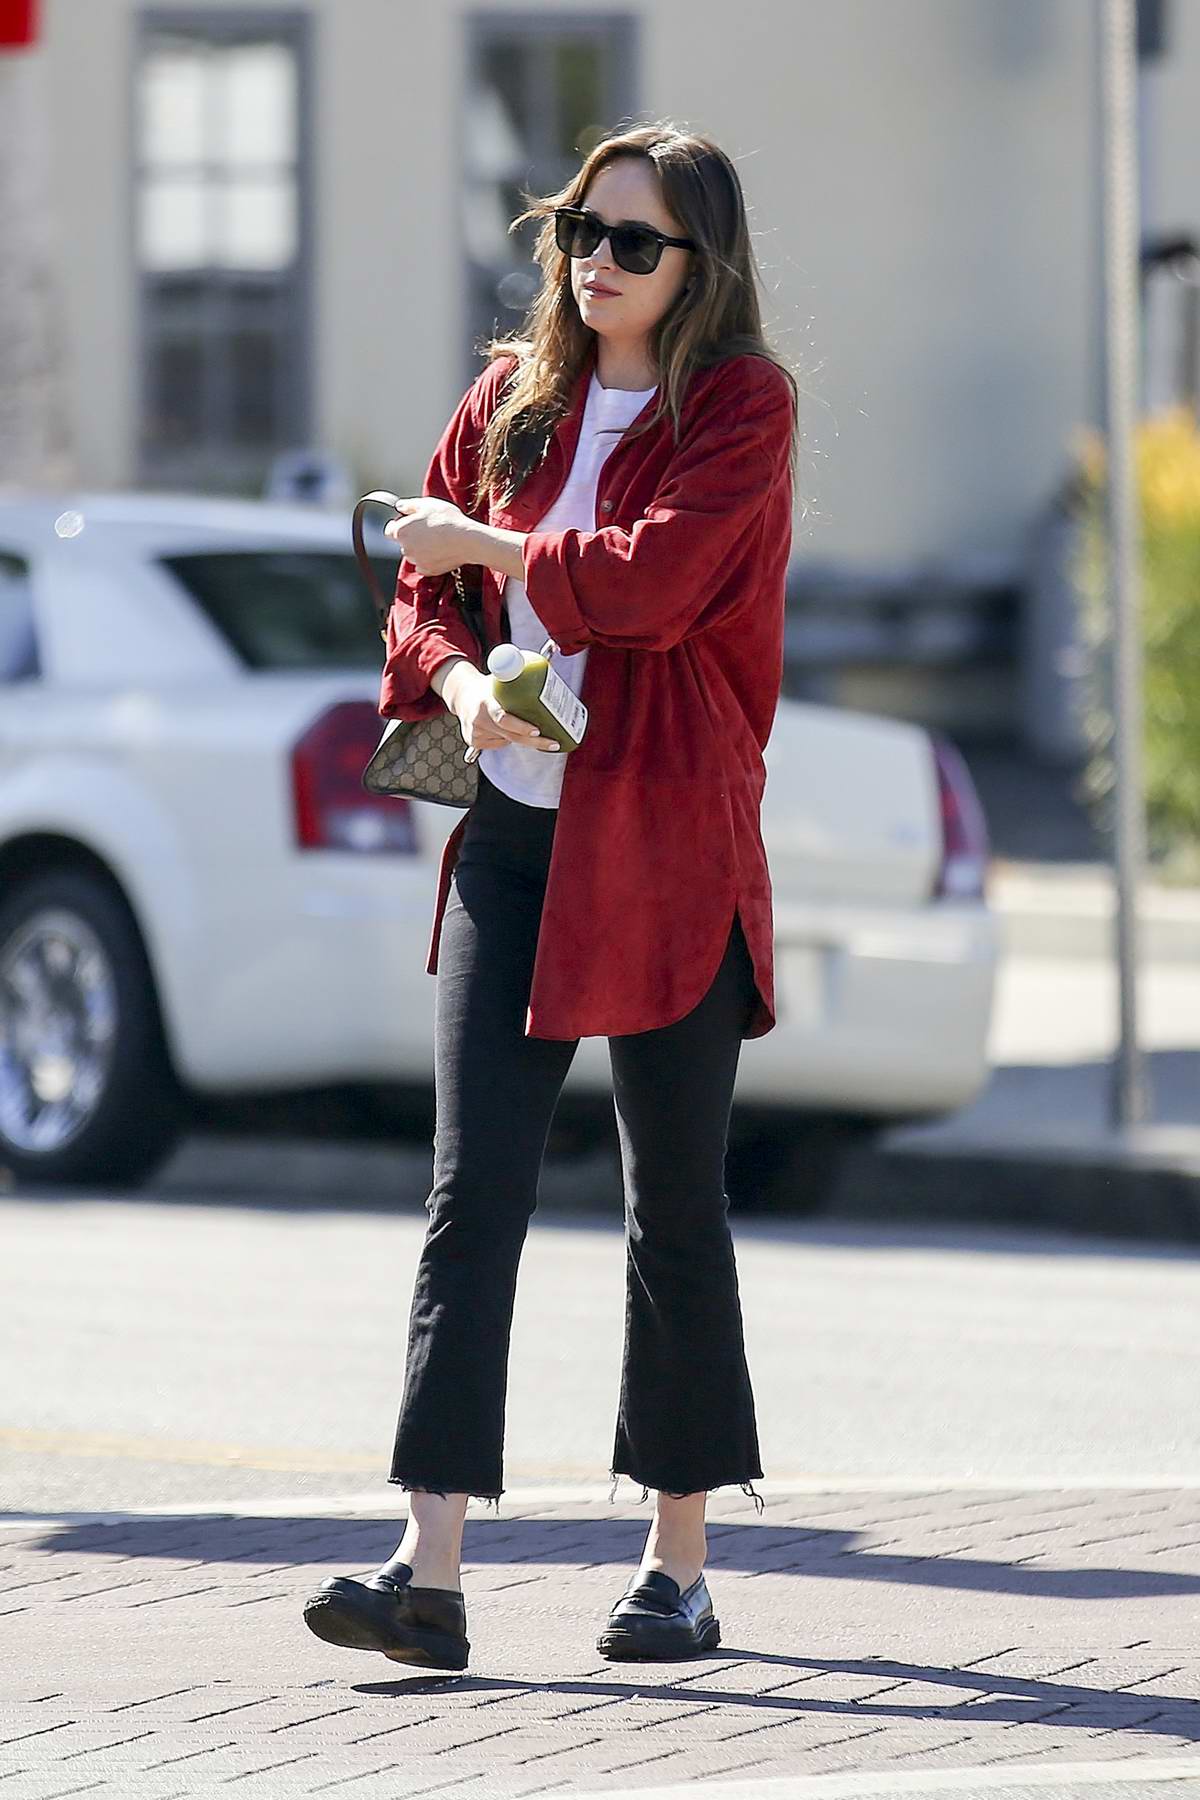 Gucci: Dakota Johnson Wearing Gucci And Carrying A Gucci Horsebit Chain  Shoulder Bag - Luxferity